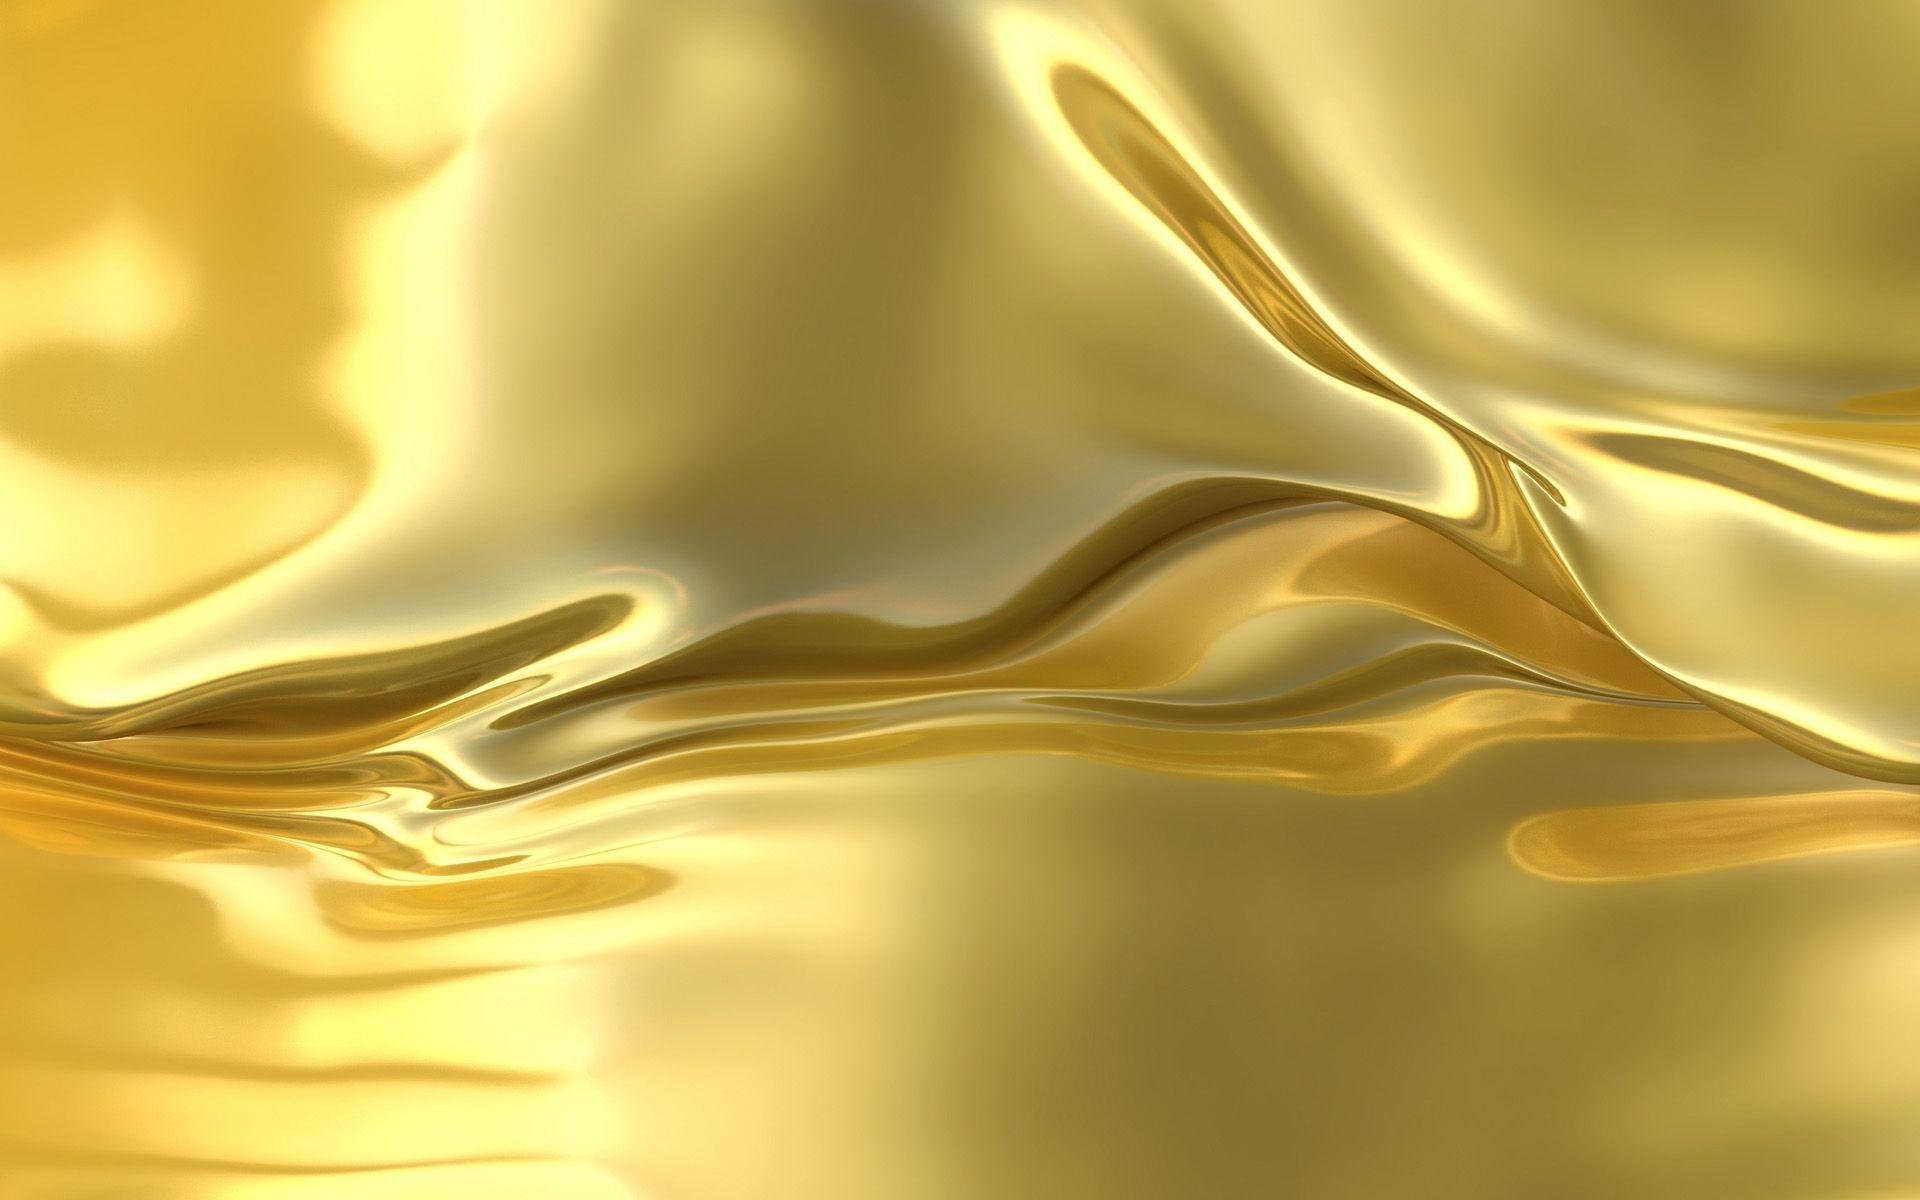 hd wallpaper golden wallpaper ouro abstract gold texture